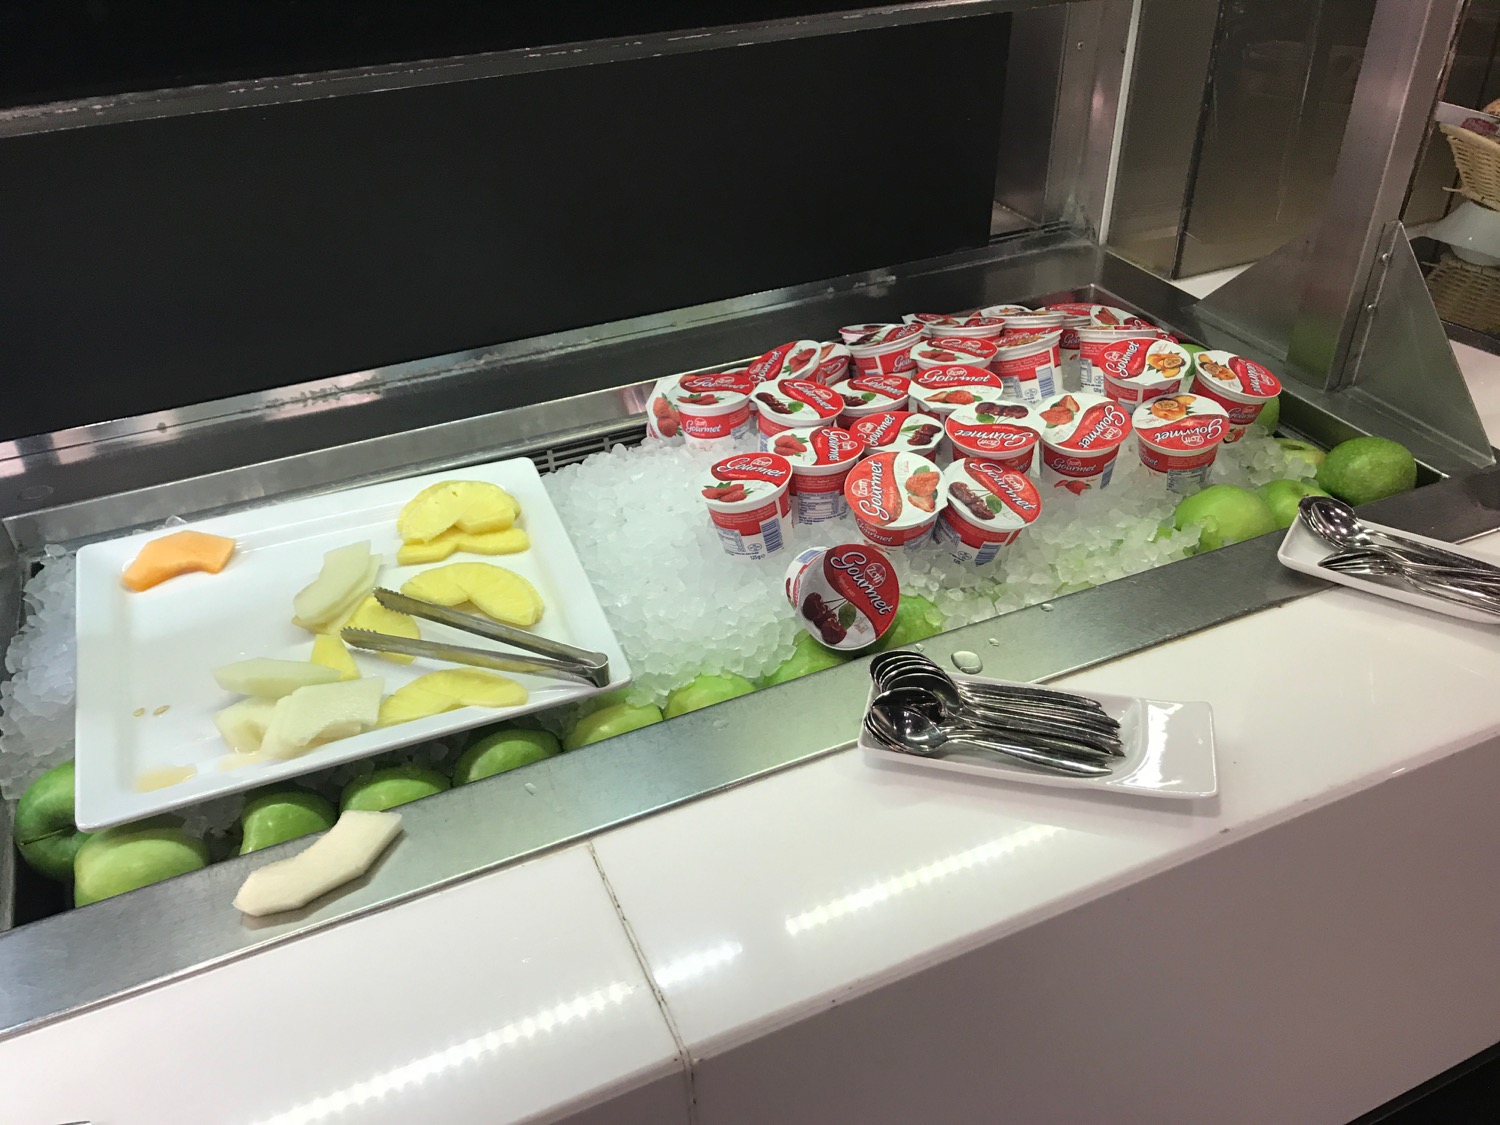 a tray of yogurt and fruit on ice